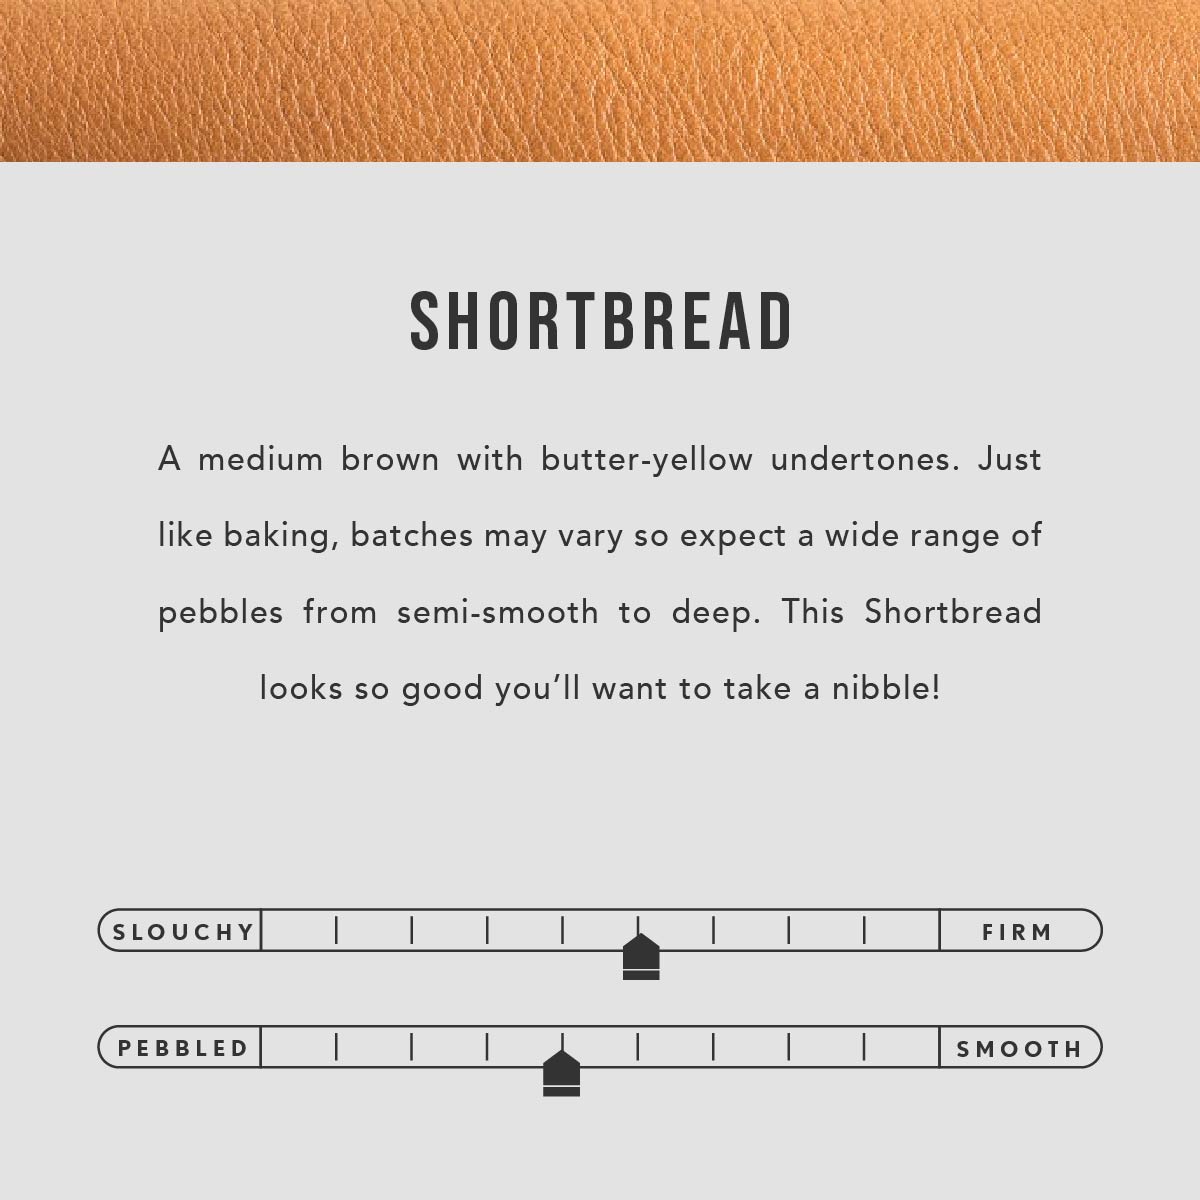 Shortbread | infographic